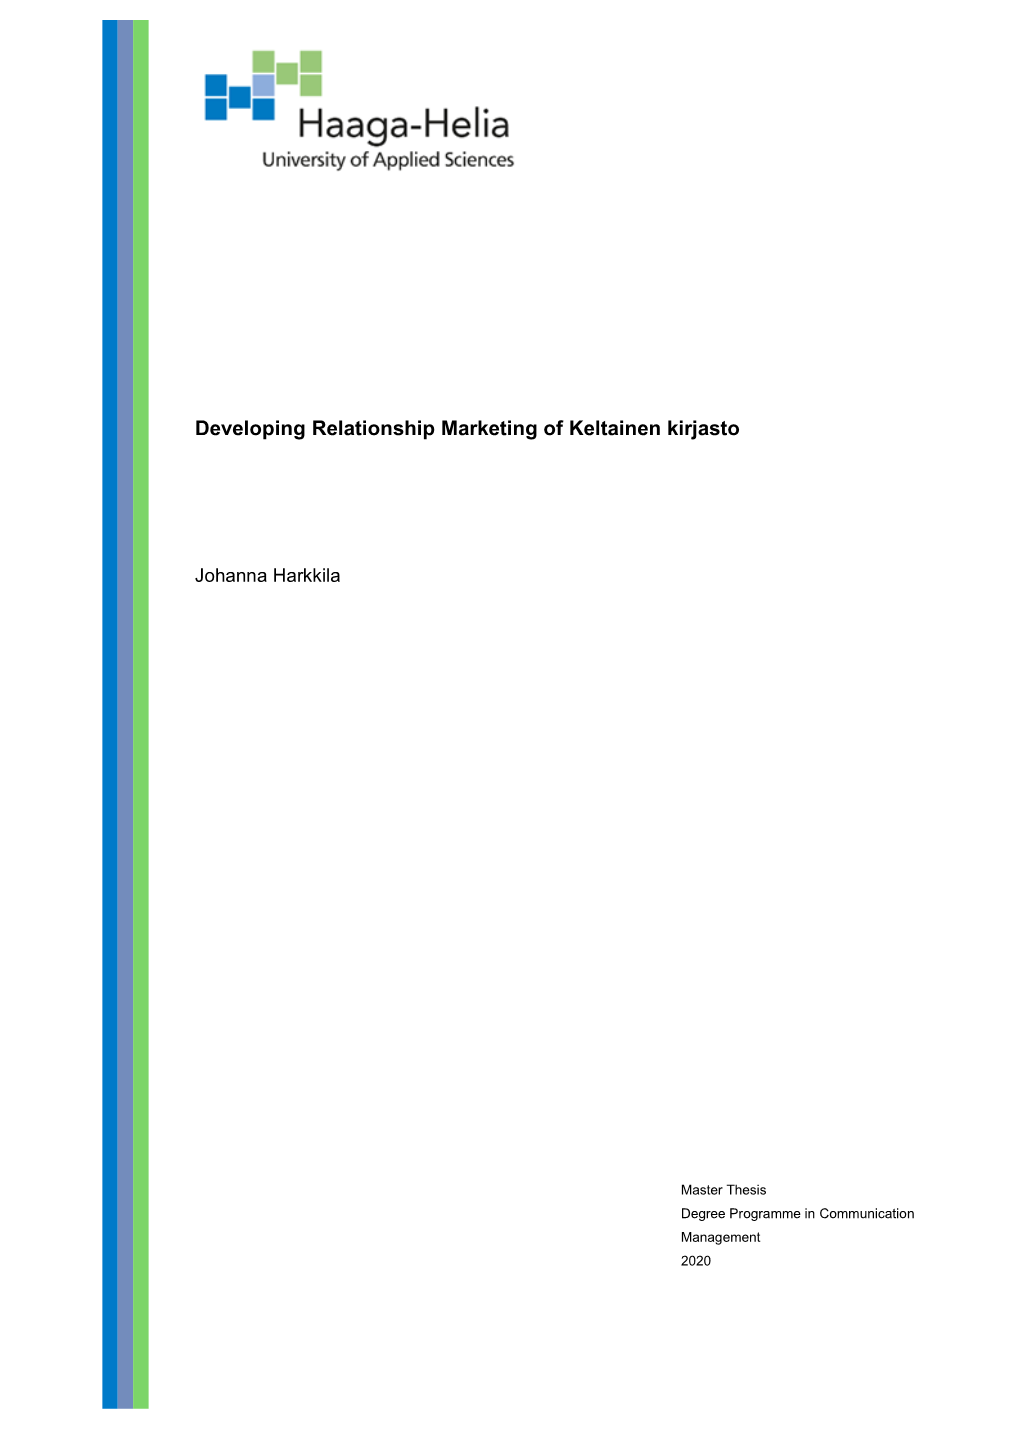 Developing Relationship Marketing of Keltainen Kirjasto